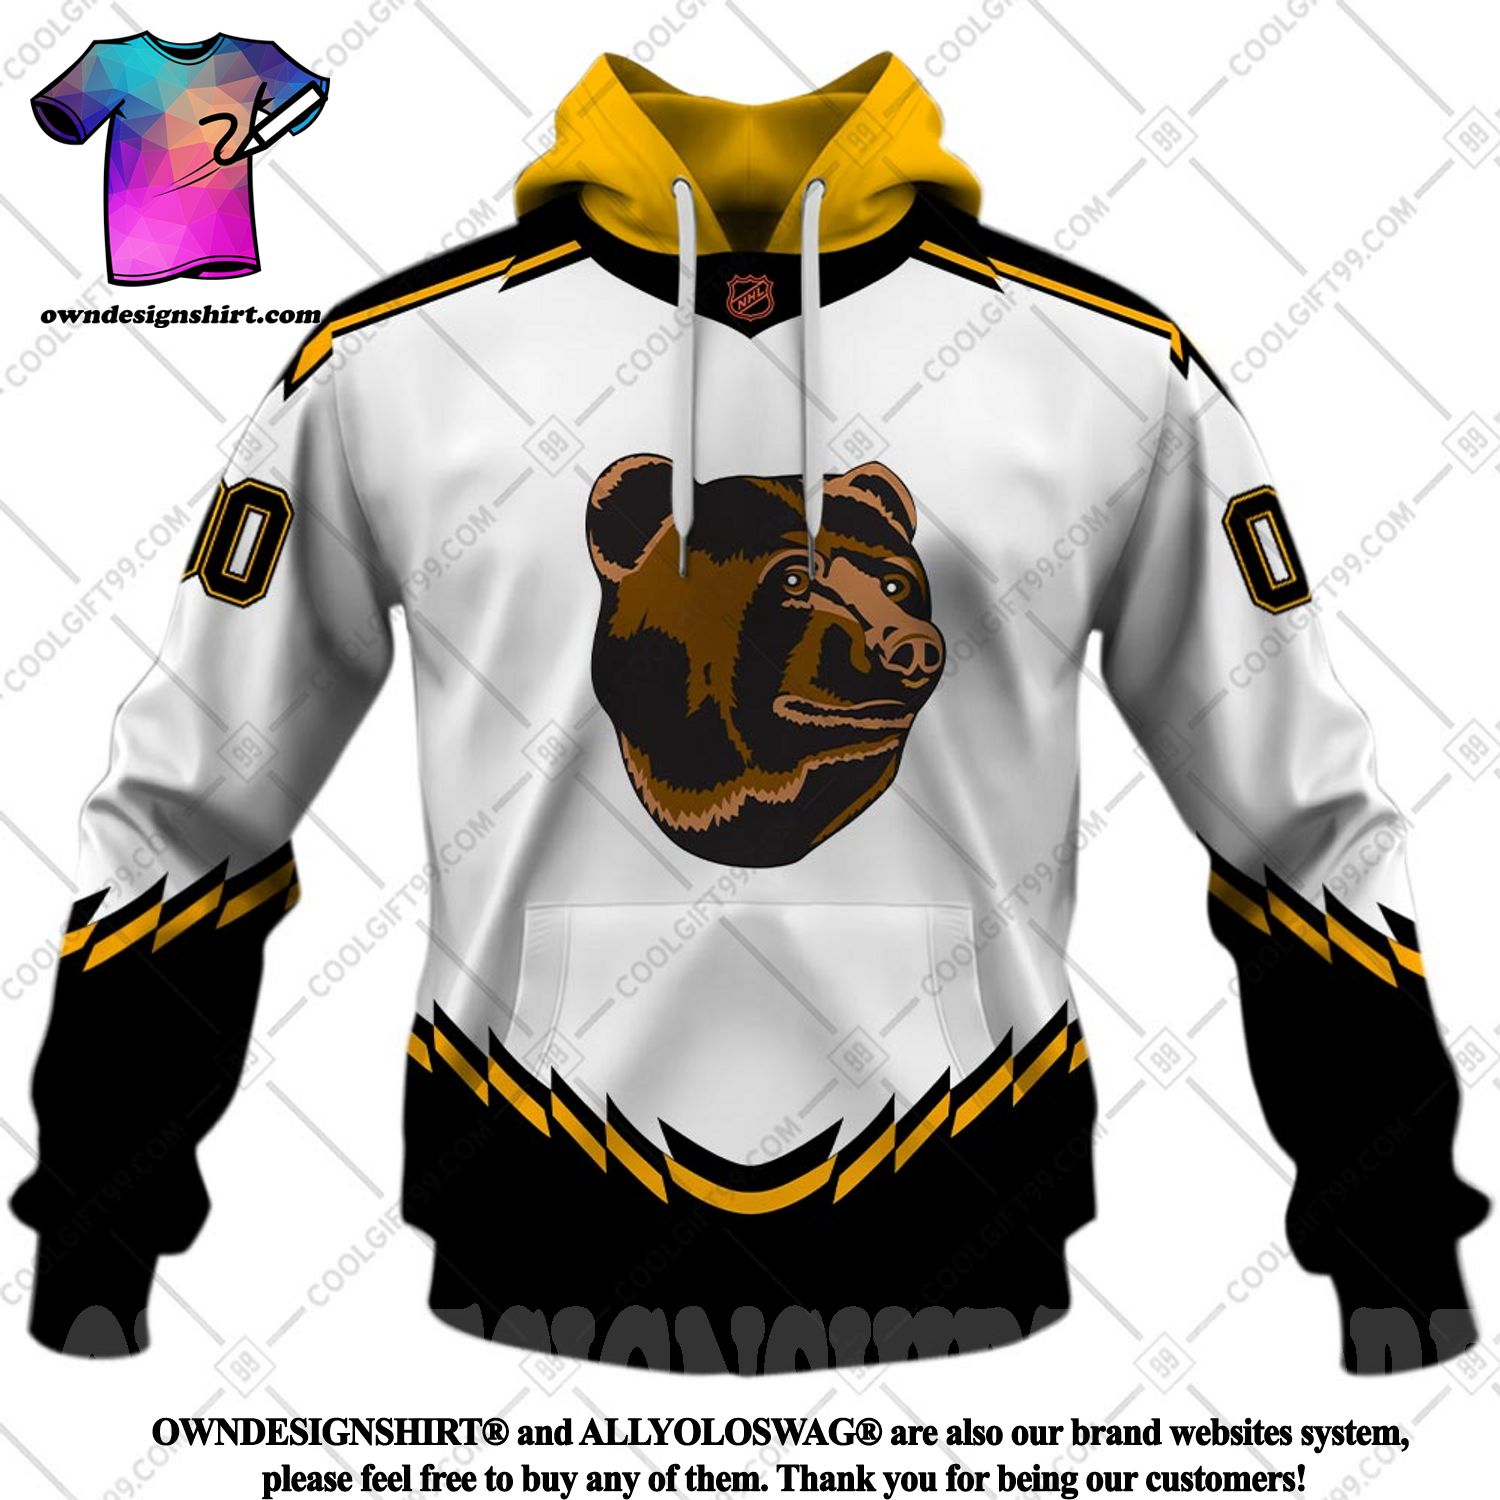 Boston Bruins pooh bear reverse retro Bruins shirt, hoodie